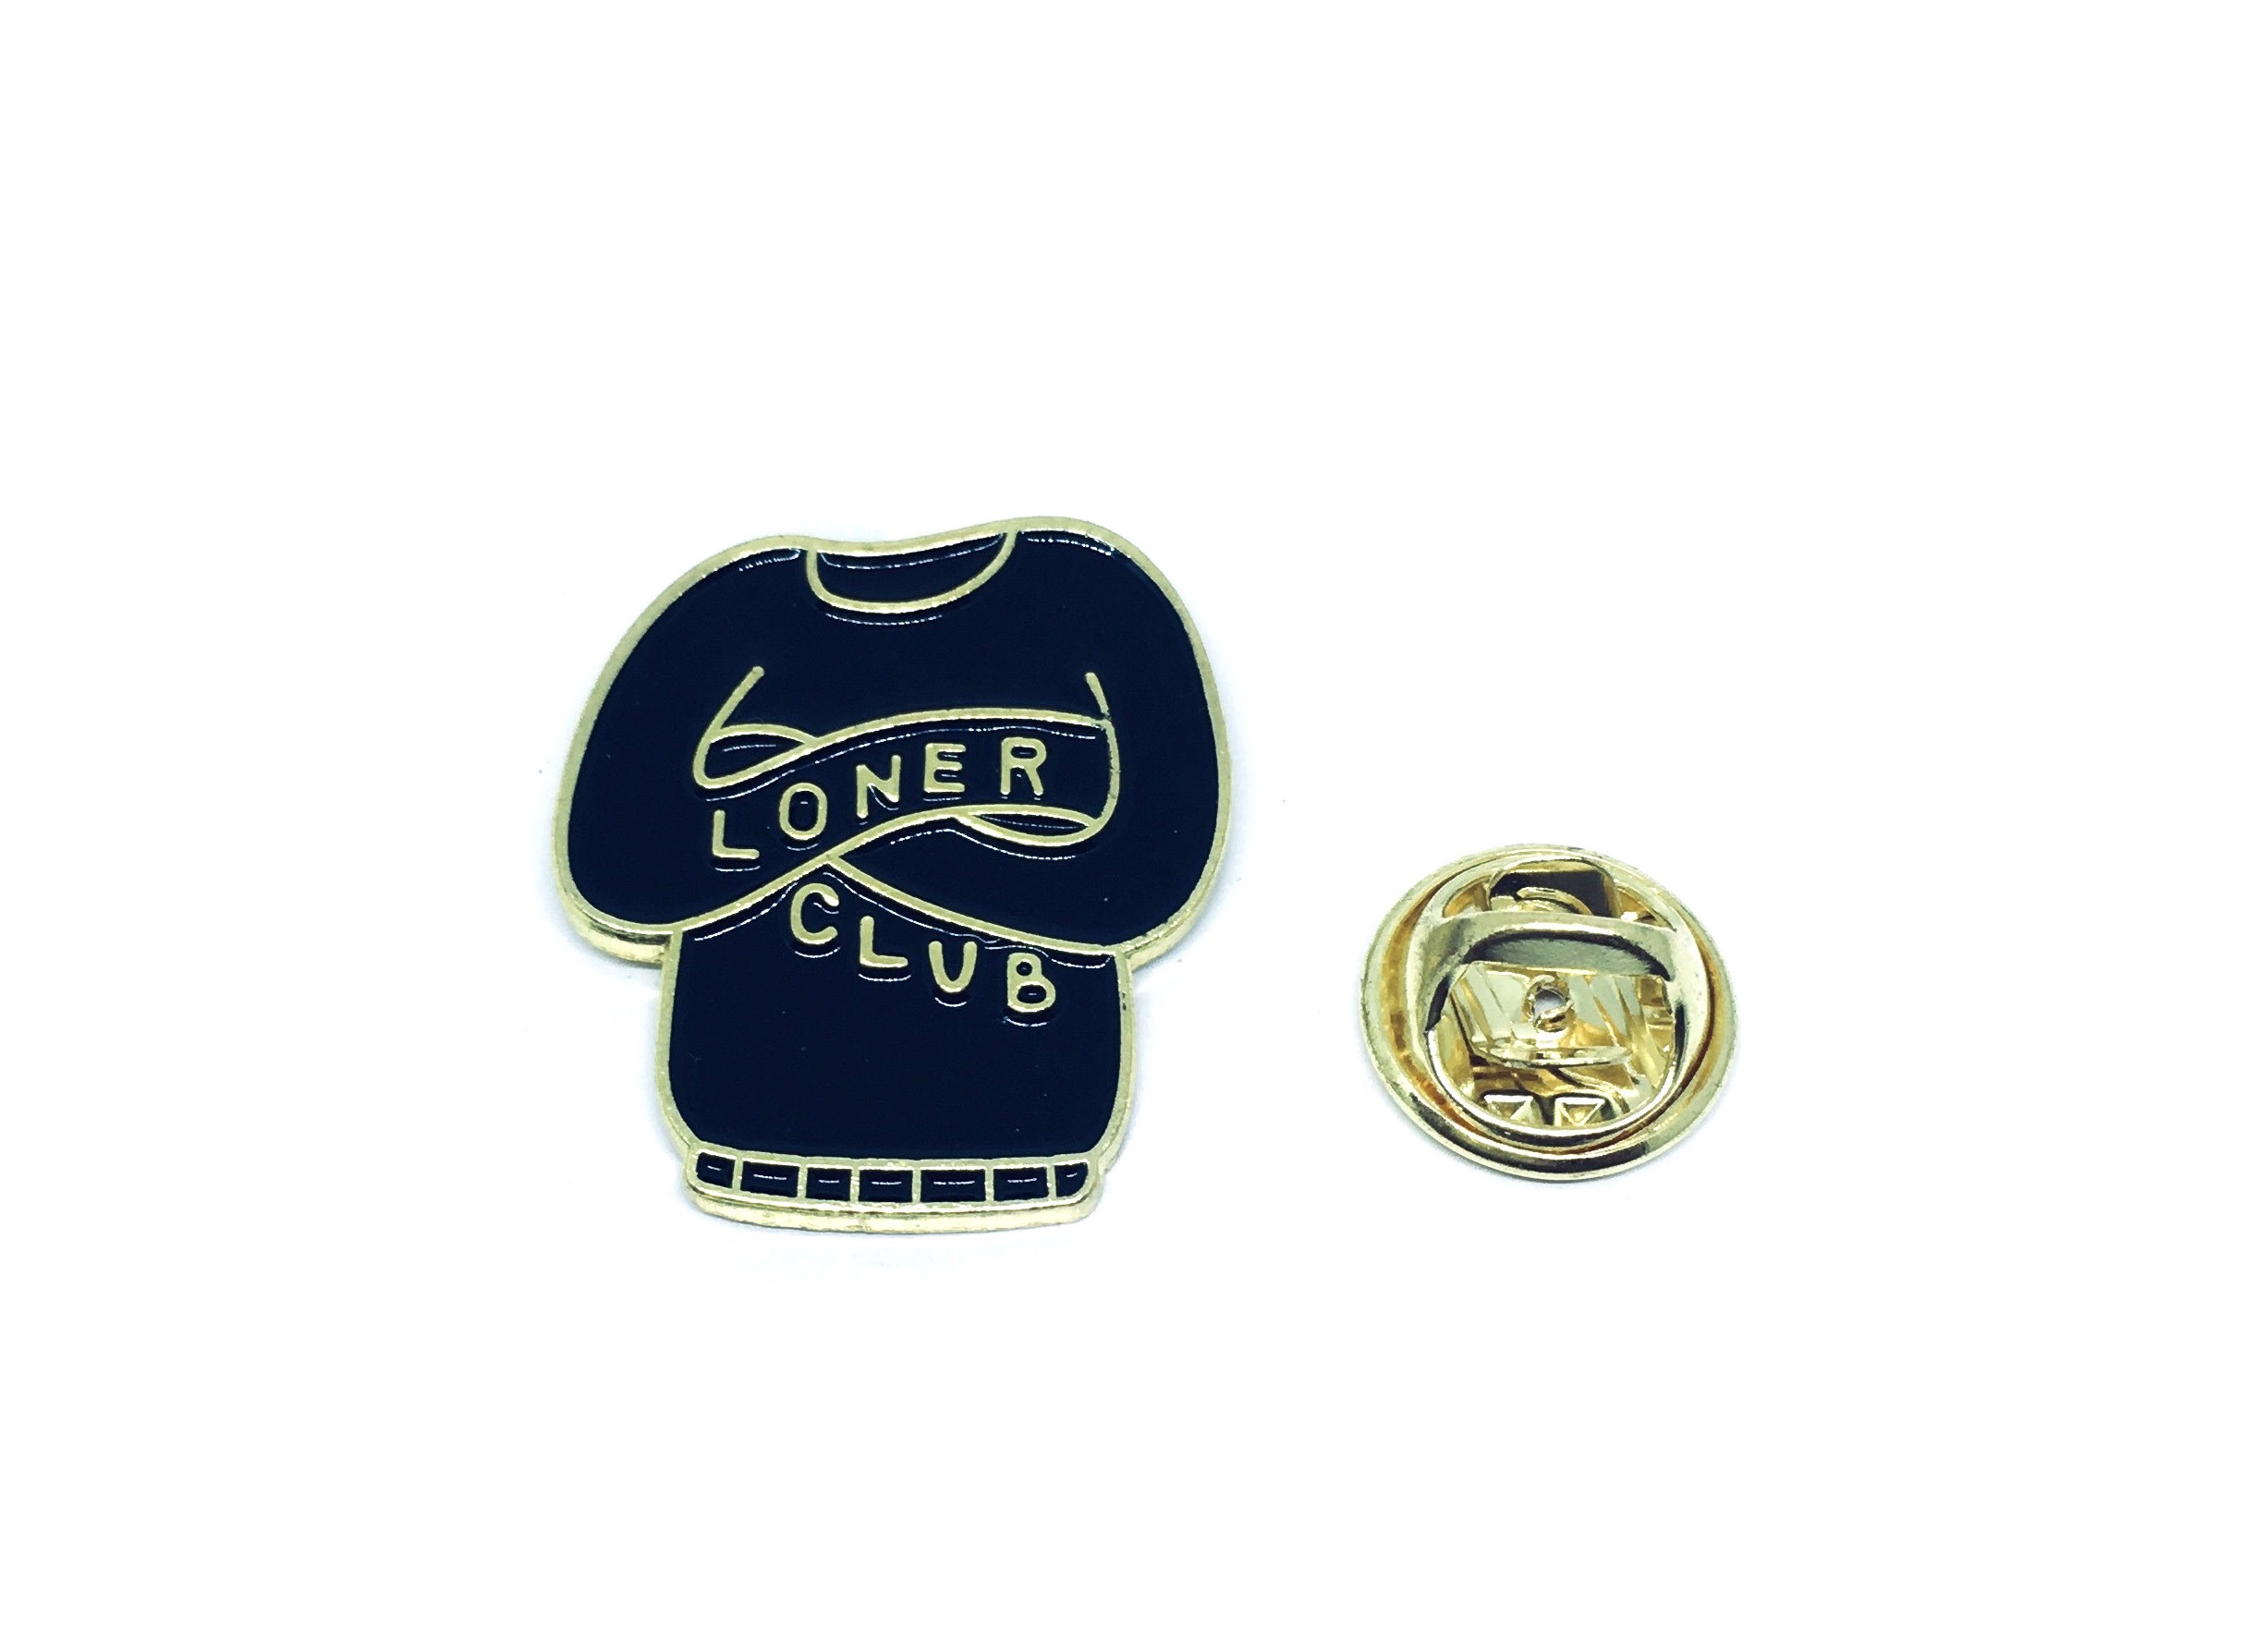 Loner Club Pin